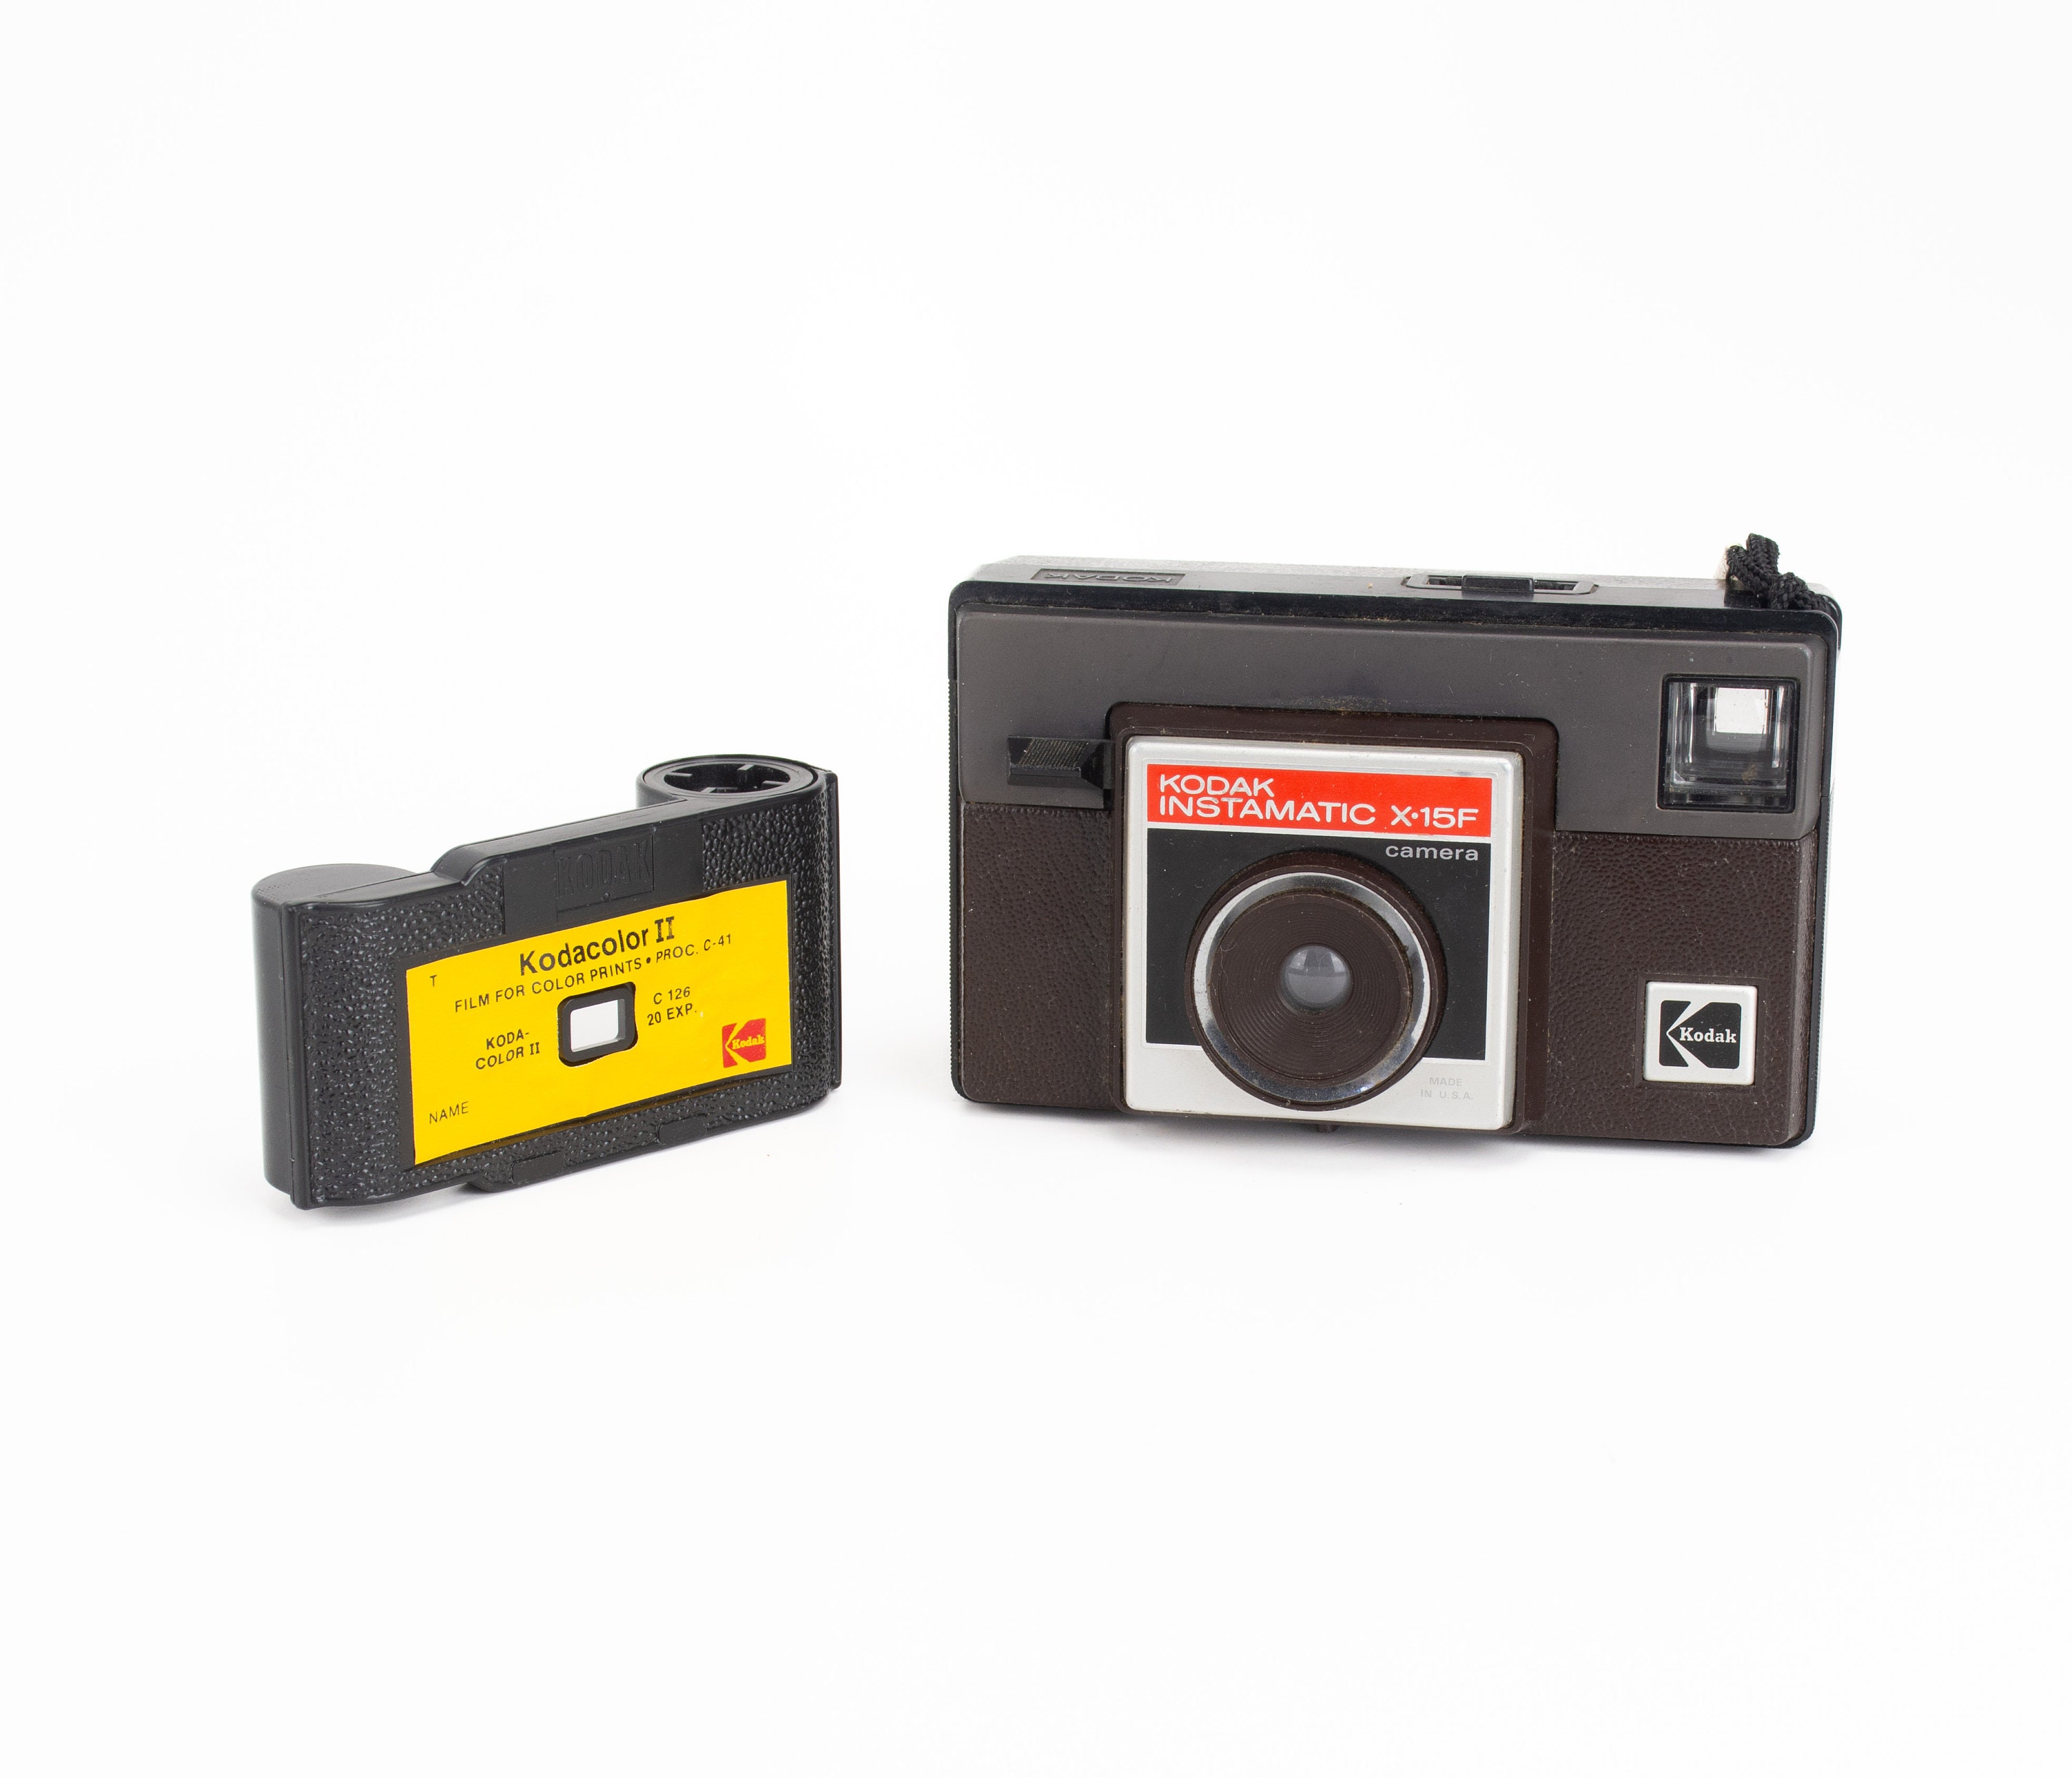 Kodak Instamatic X-15F 126 Camera in Glorious Brown With Empty 126